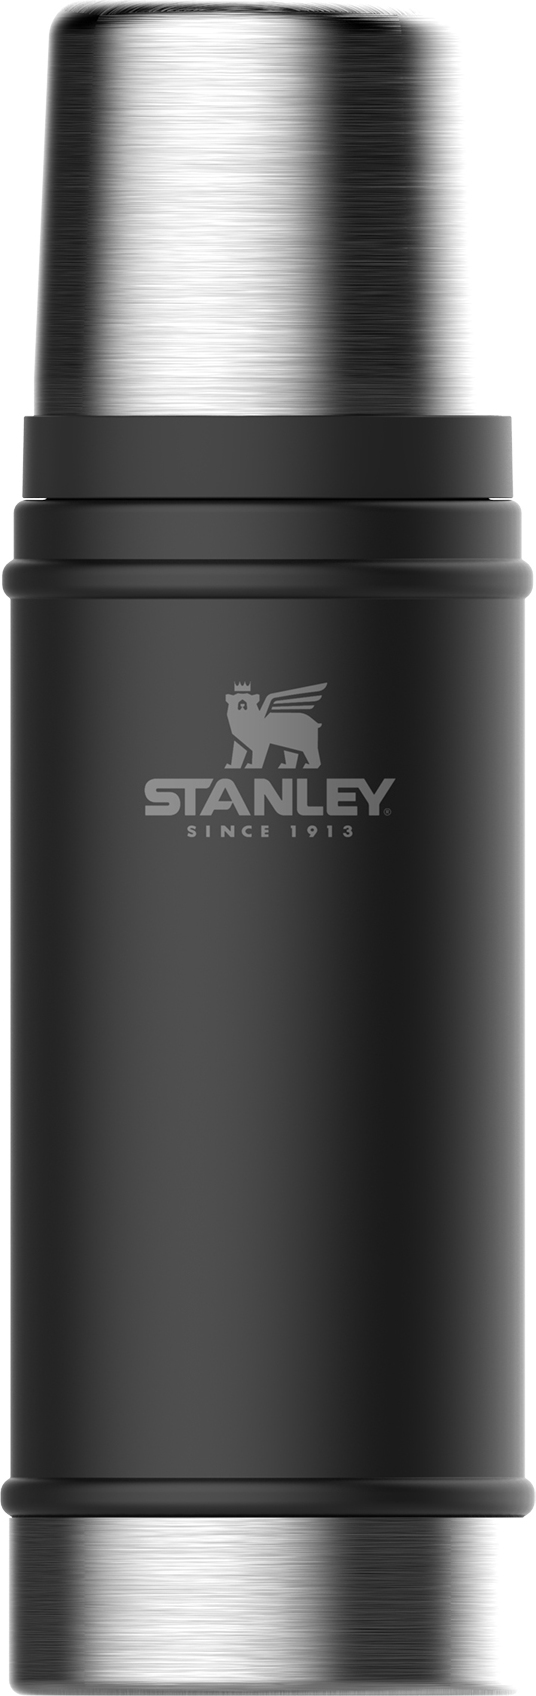 https://3fa-media.com/stanley/stanley-legendary-classic-thermos-black__71814_1bd960c-s2500x2500.jpg